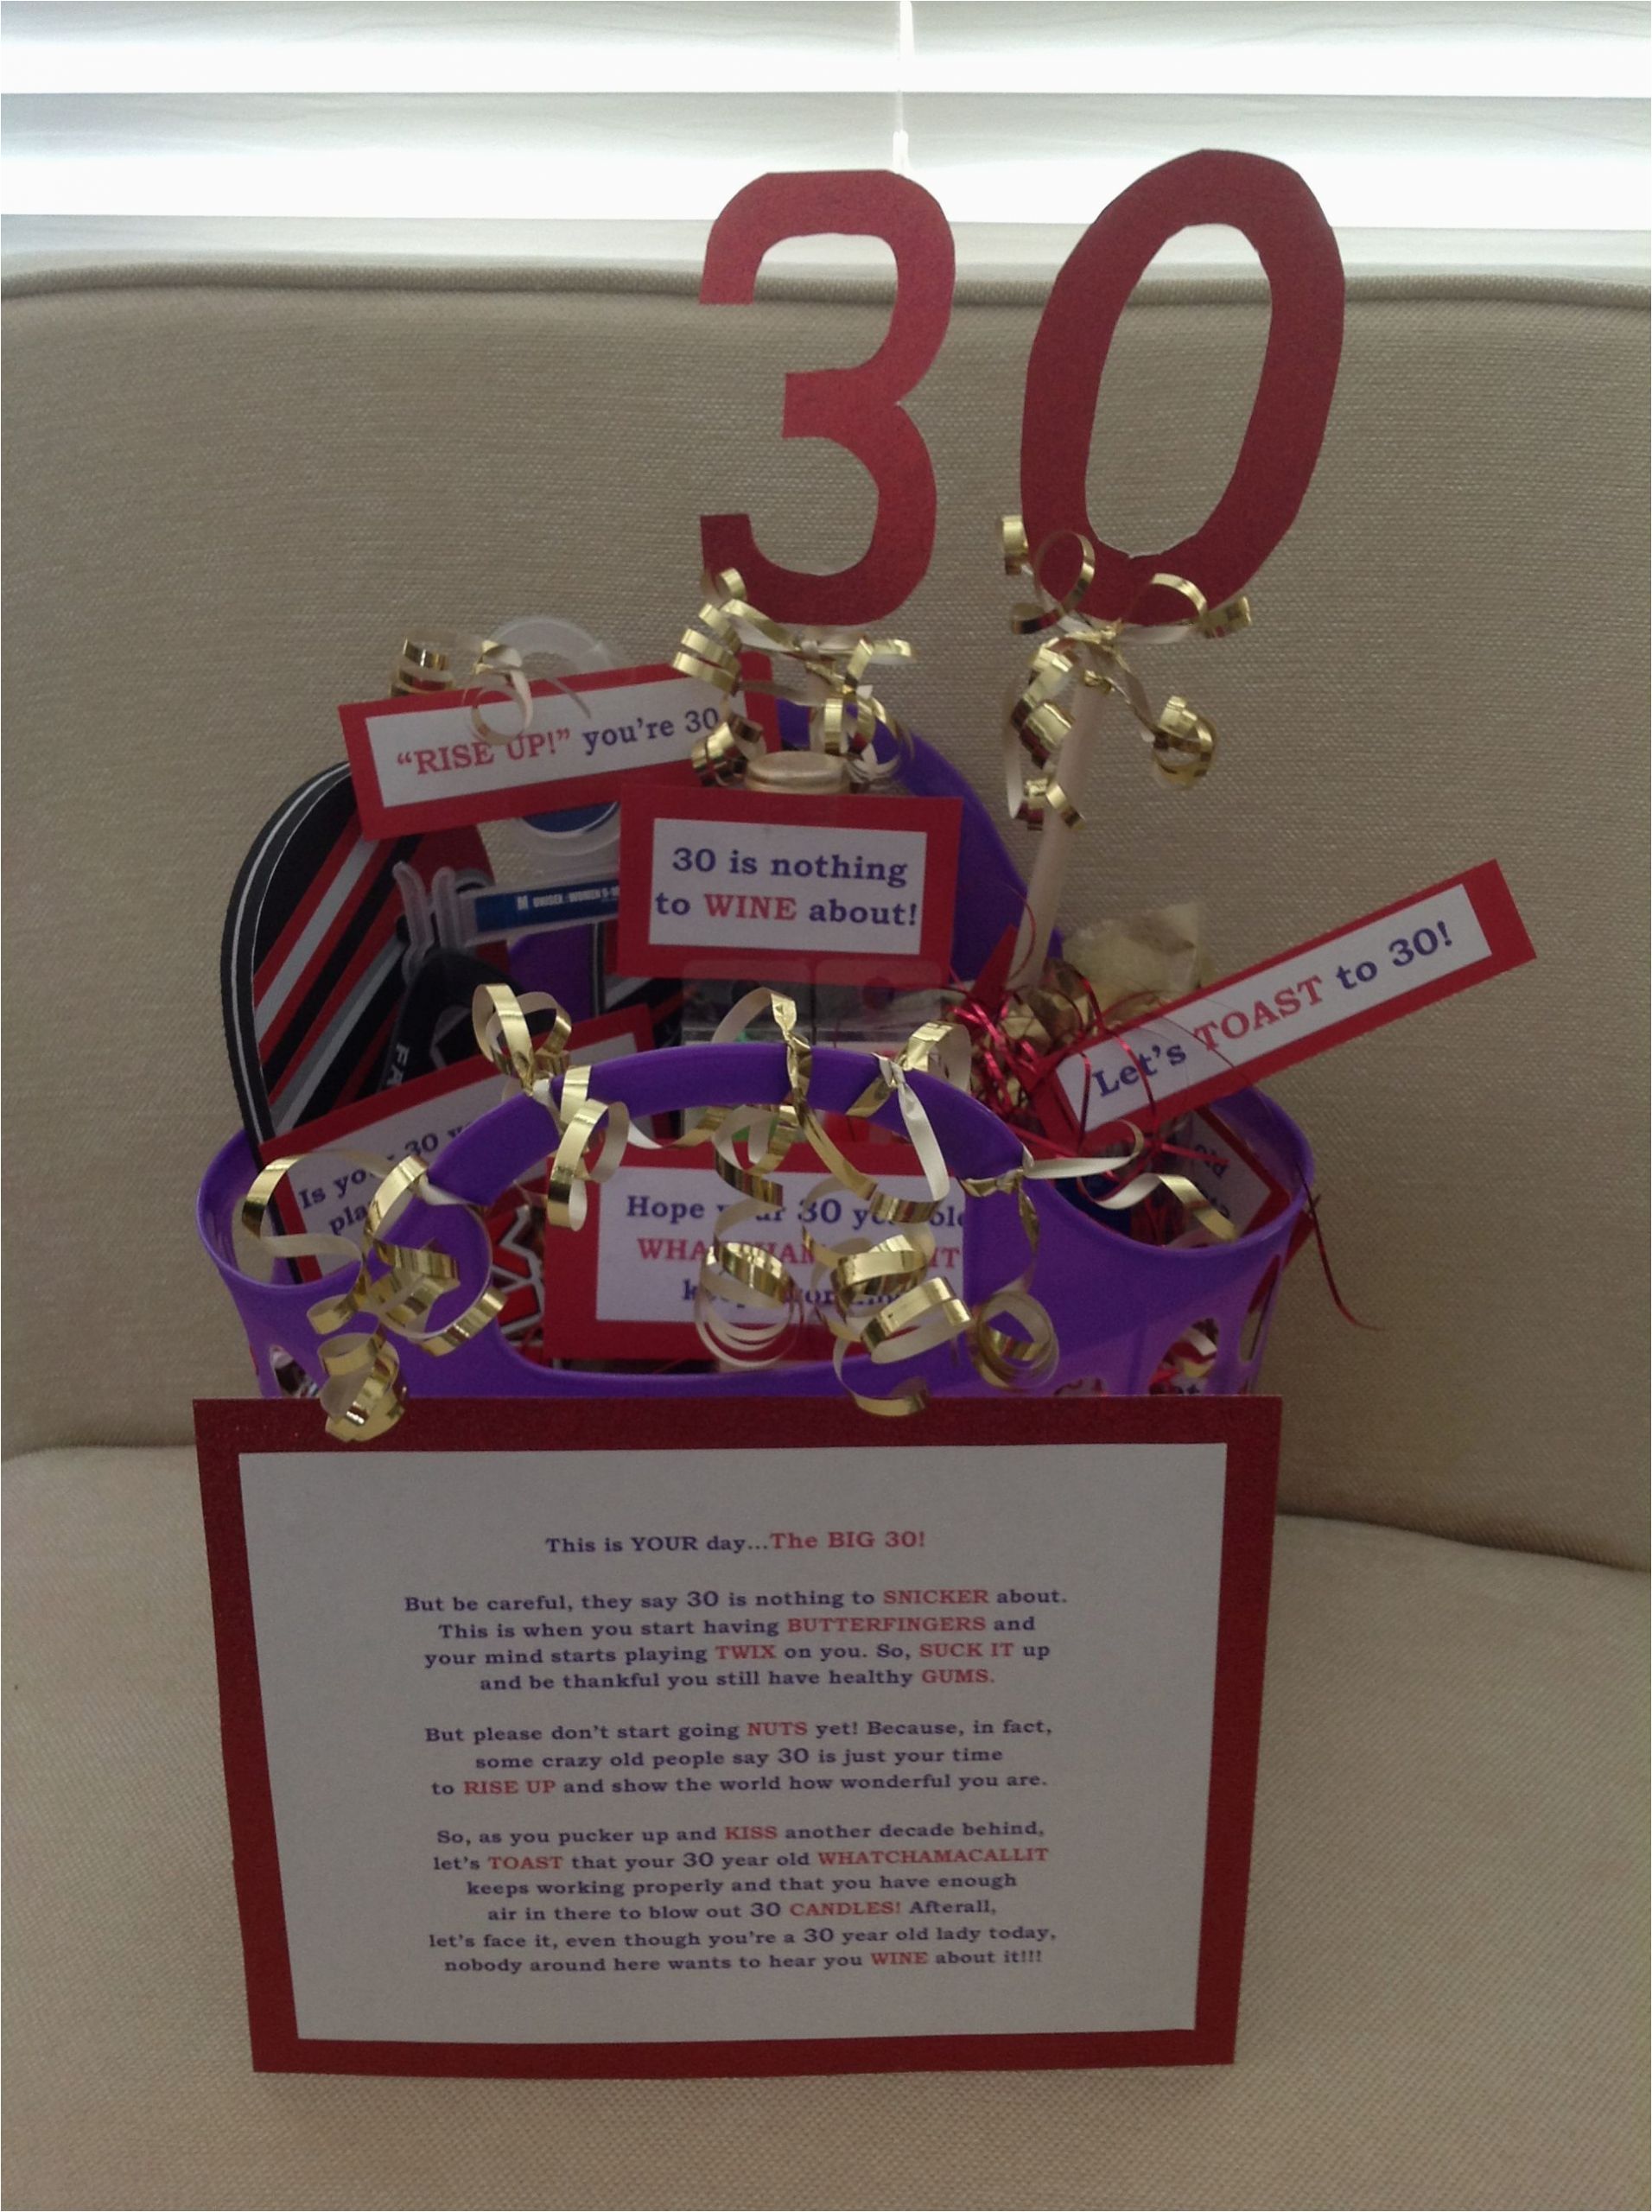 Best 30th Birthday Gifts for Boyfriend 30th Birthday Gift Basket Easy Diy and so Fun Gifts